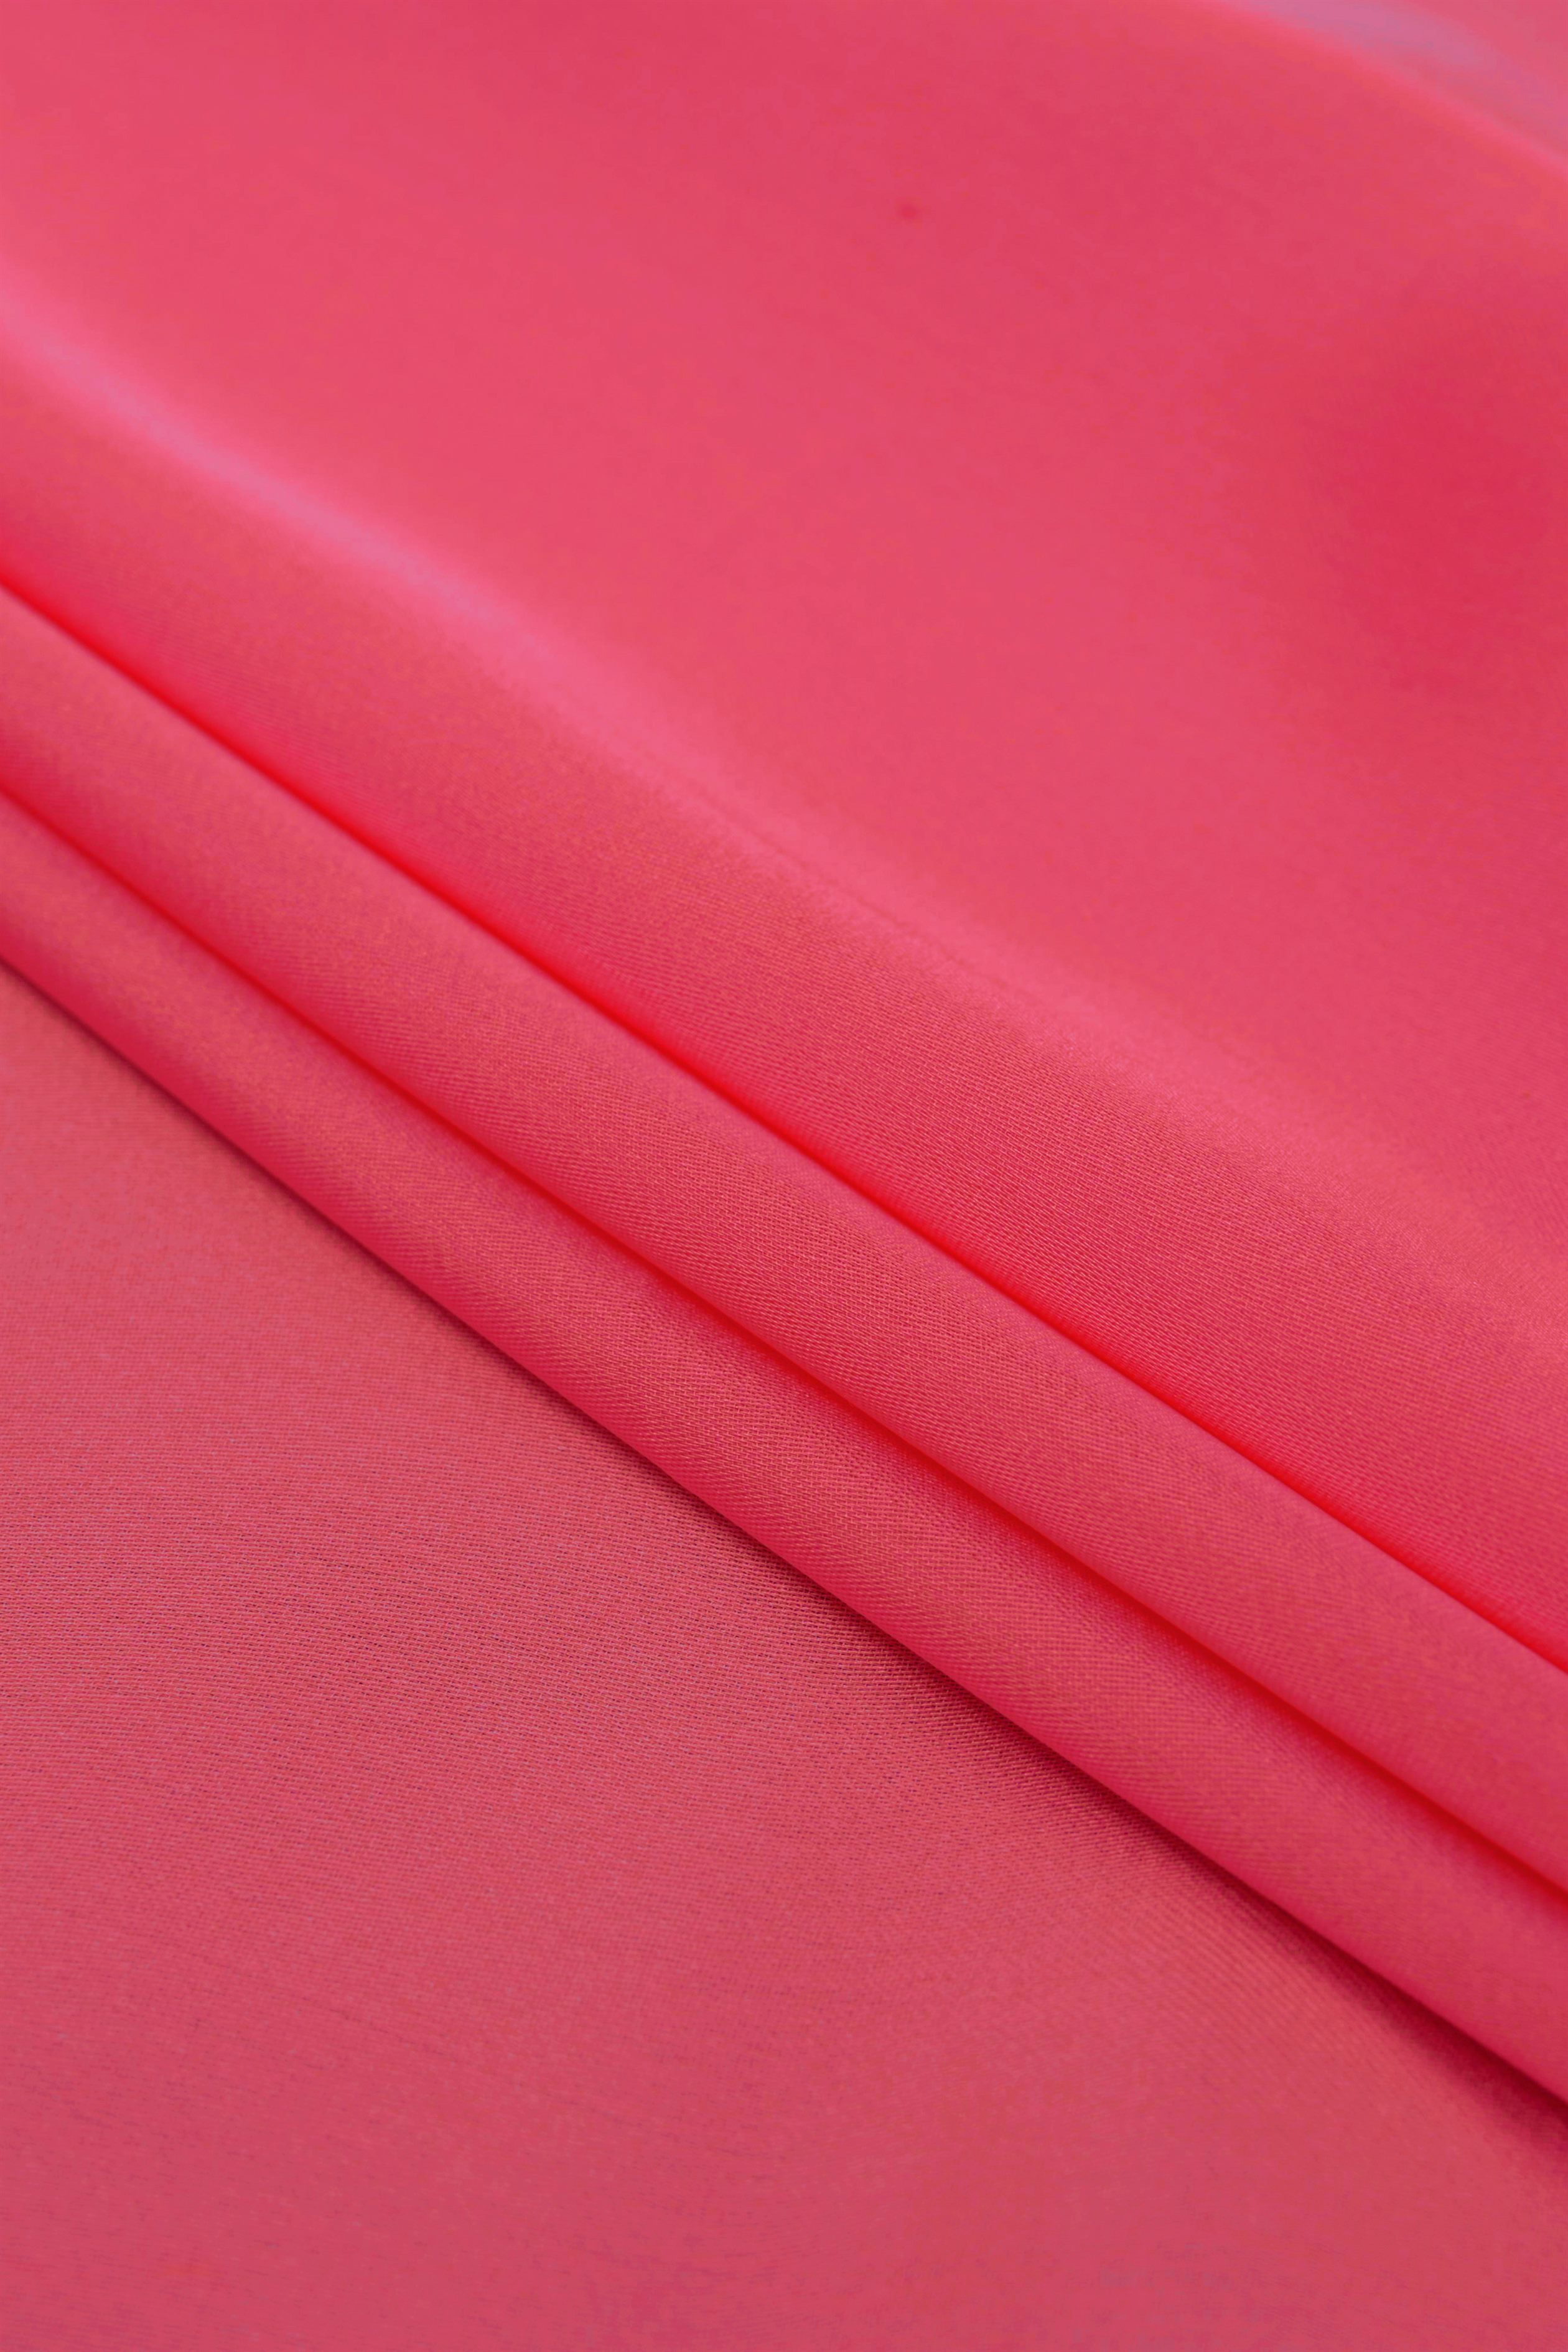 color_Reddish-Pink